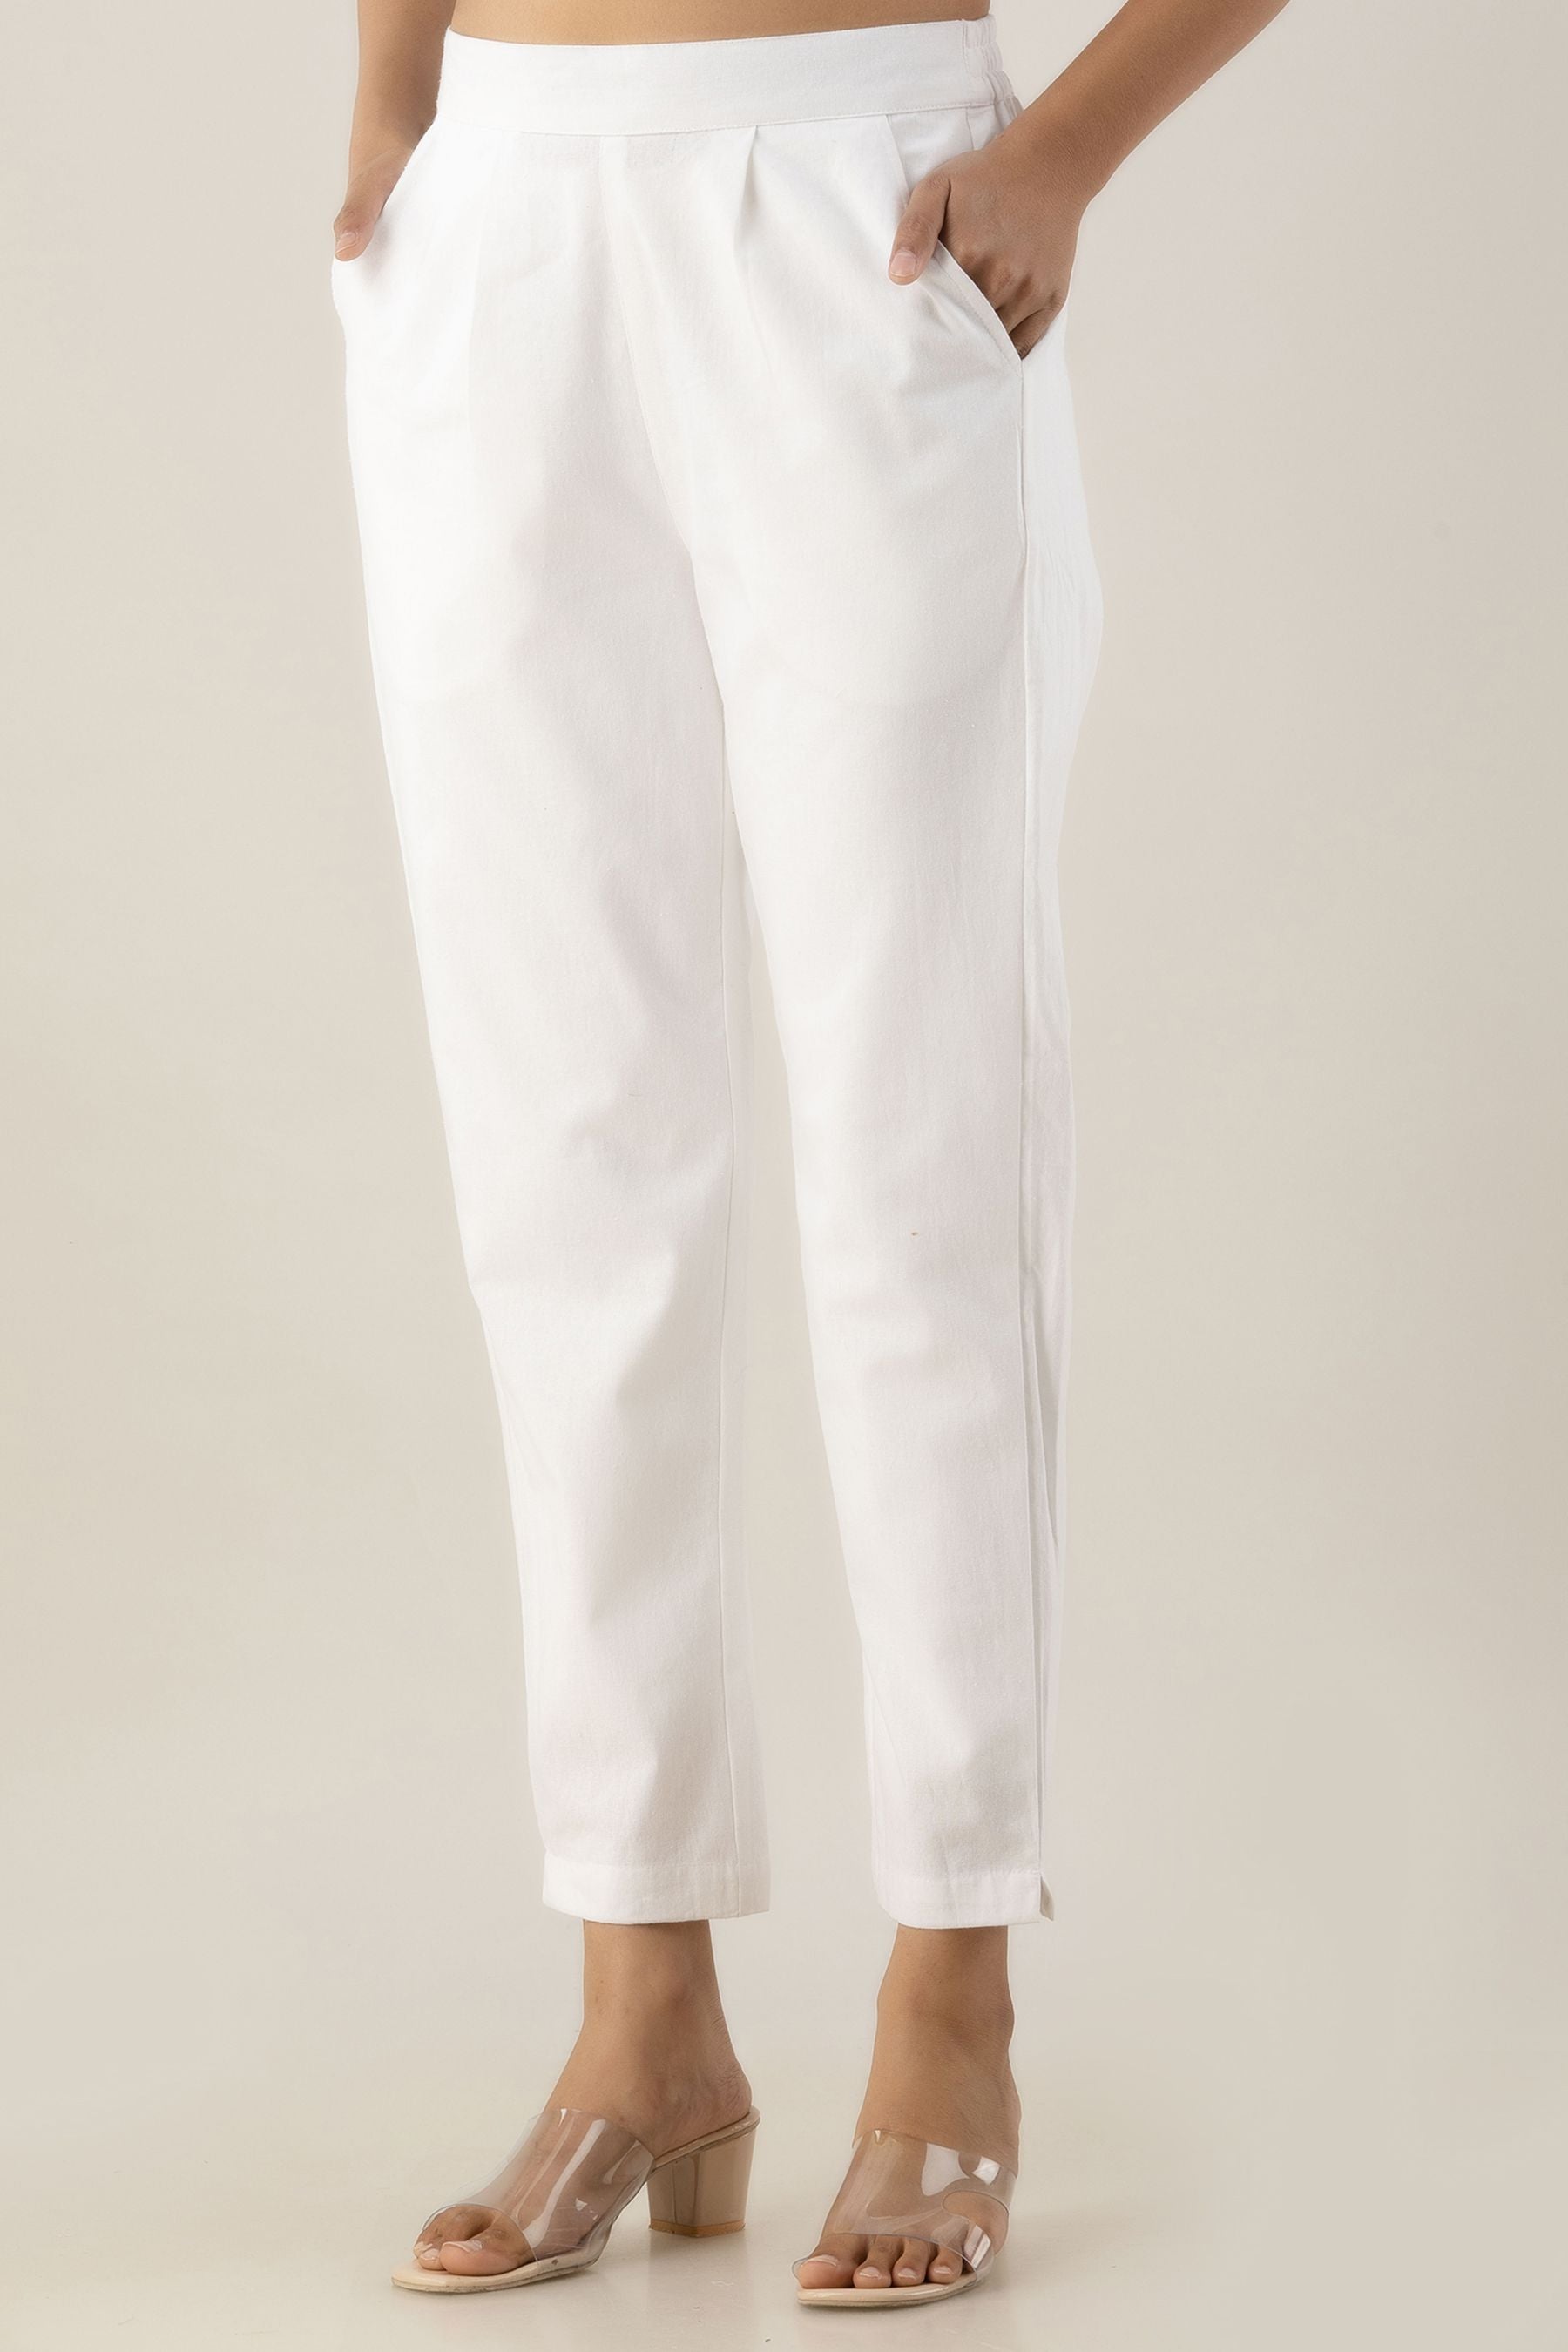 The Jetset - White Linen Women's Pants – Kenny Flowers